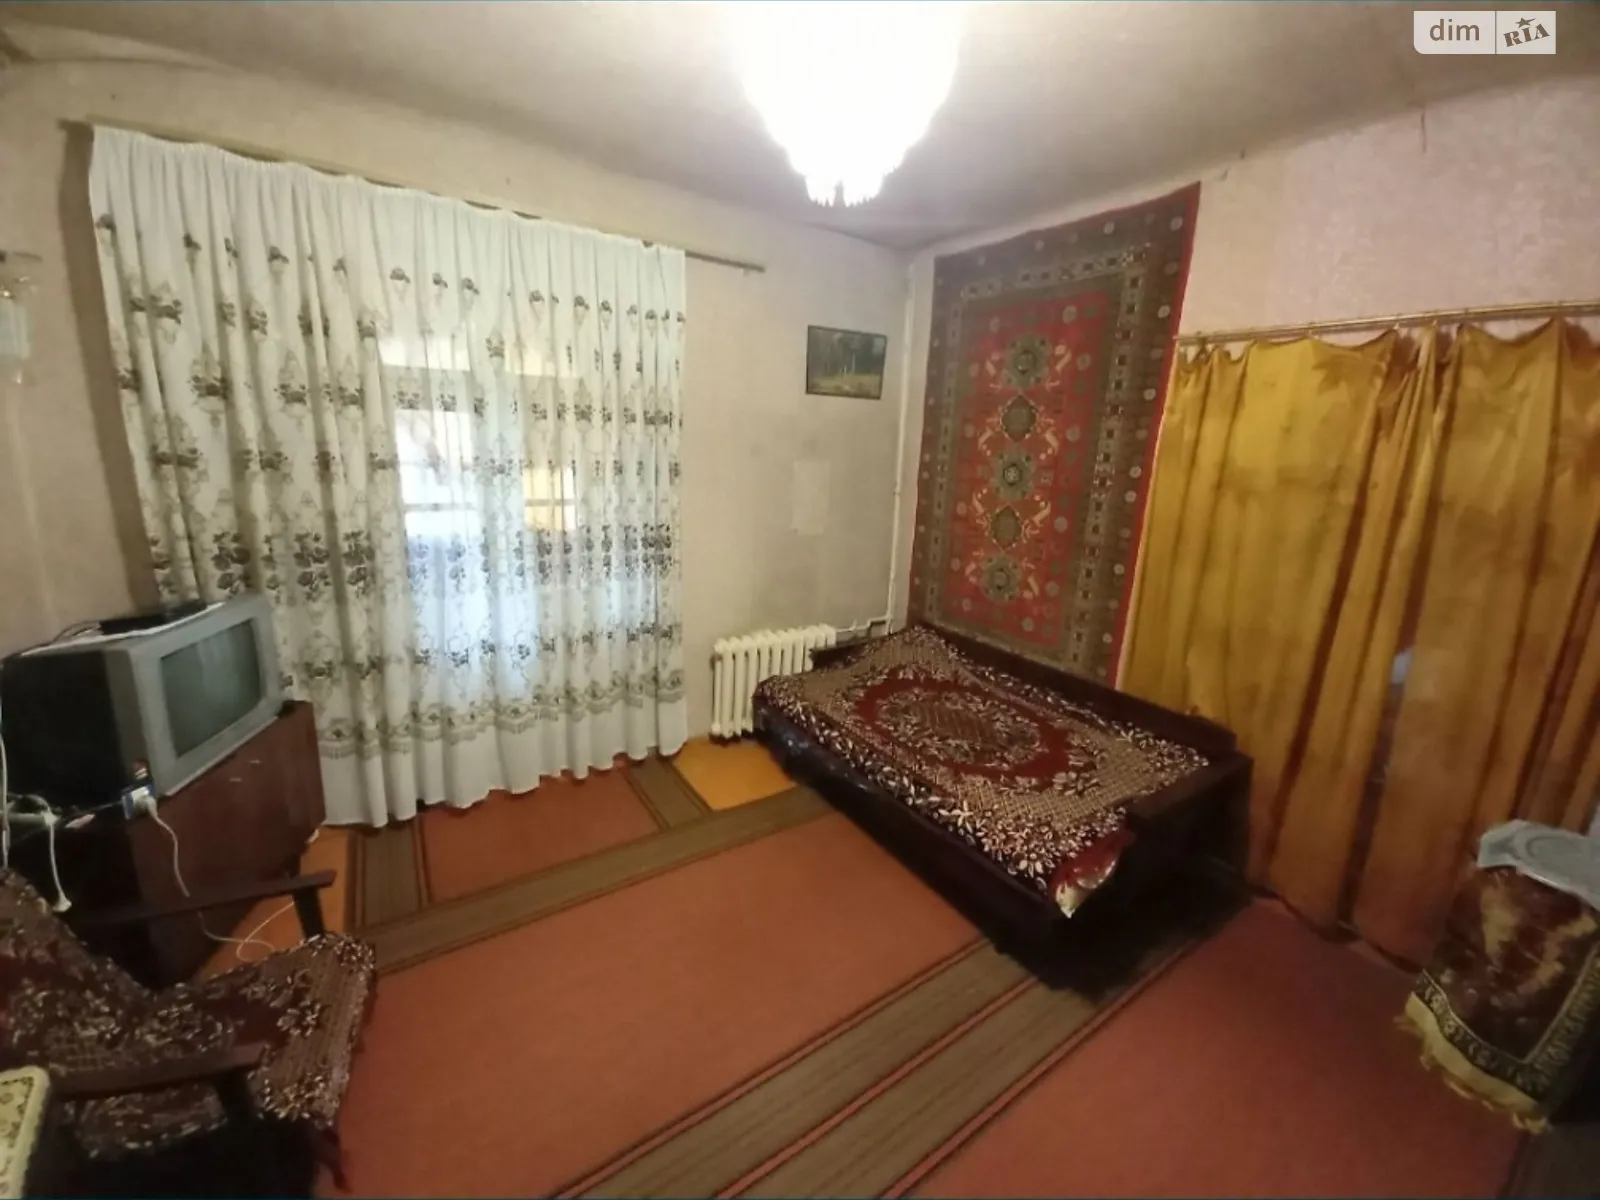 Сдается в аренду комната 40 кв. м в Николаеве, цена: 1800 грн